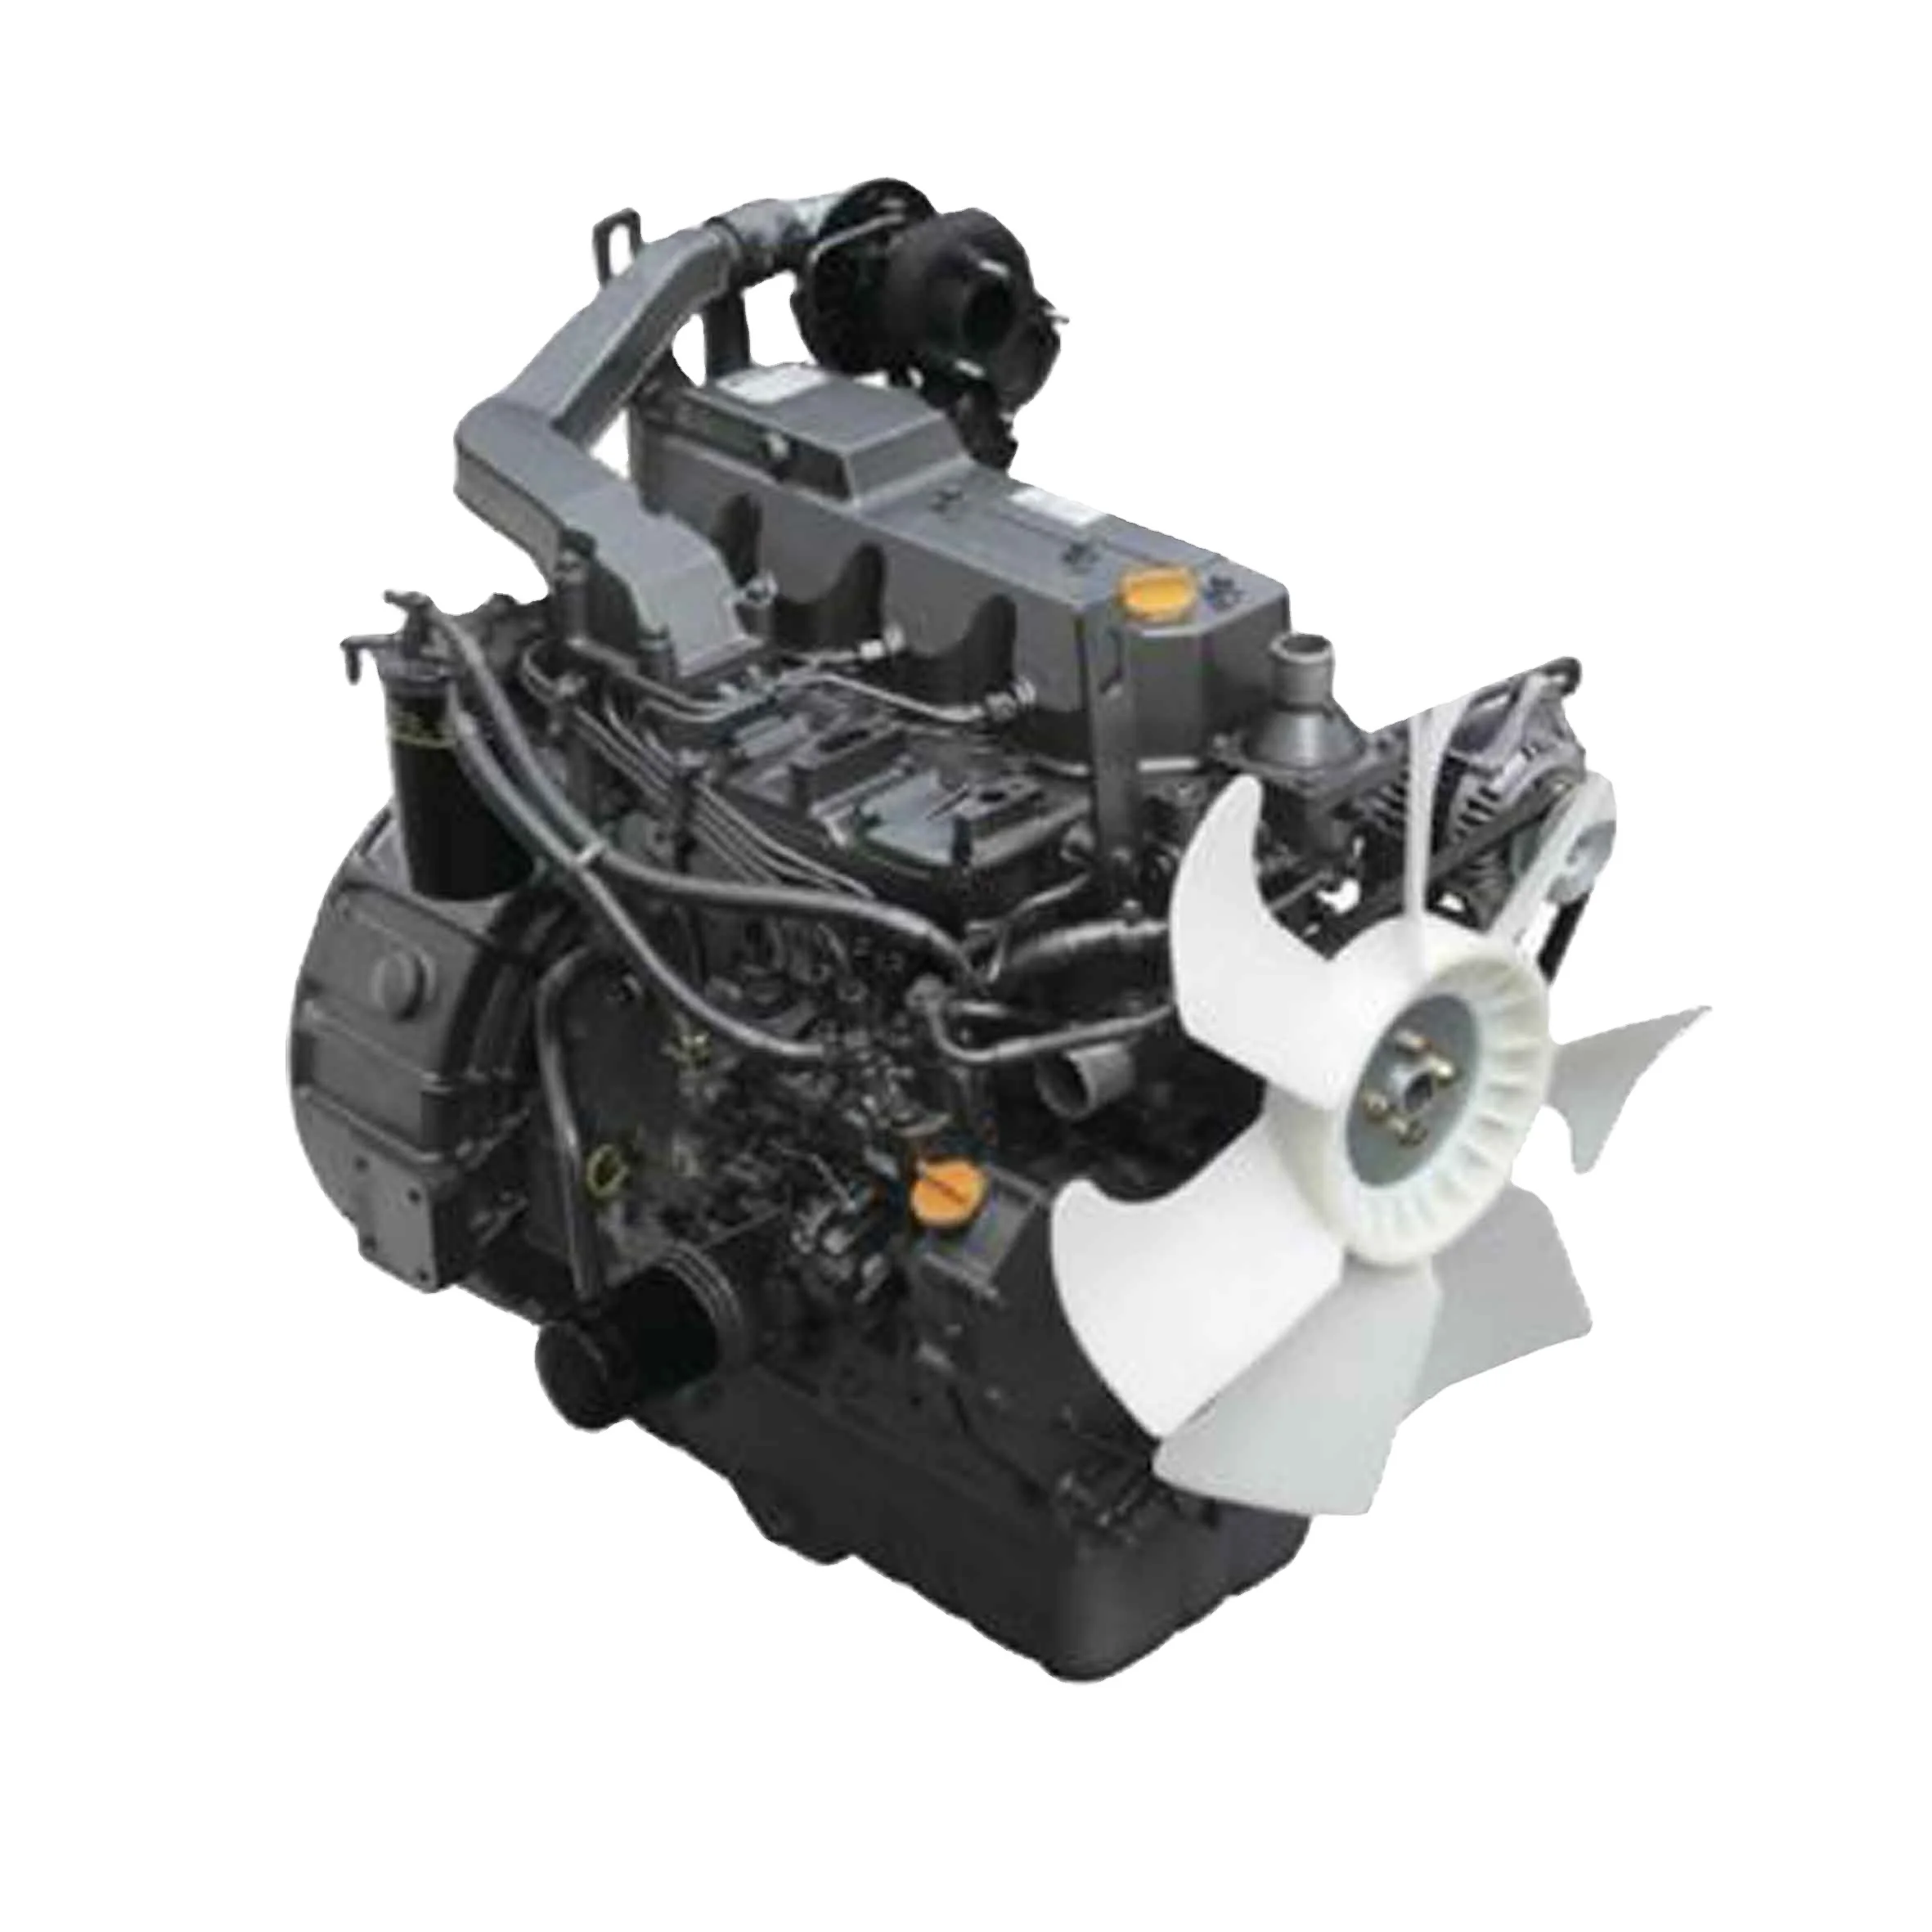 Yanmar Genuine 4 cylinder Diesel Engine Assy 4tnv98  4TN100 3TNV82 Japan Genuine Engine for sale (1600503627104)